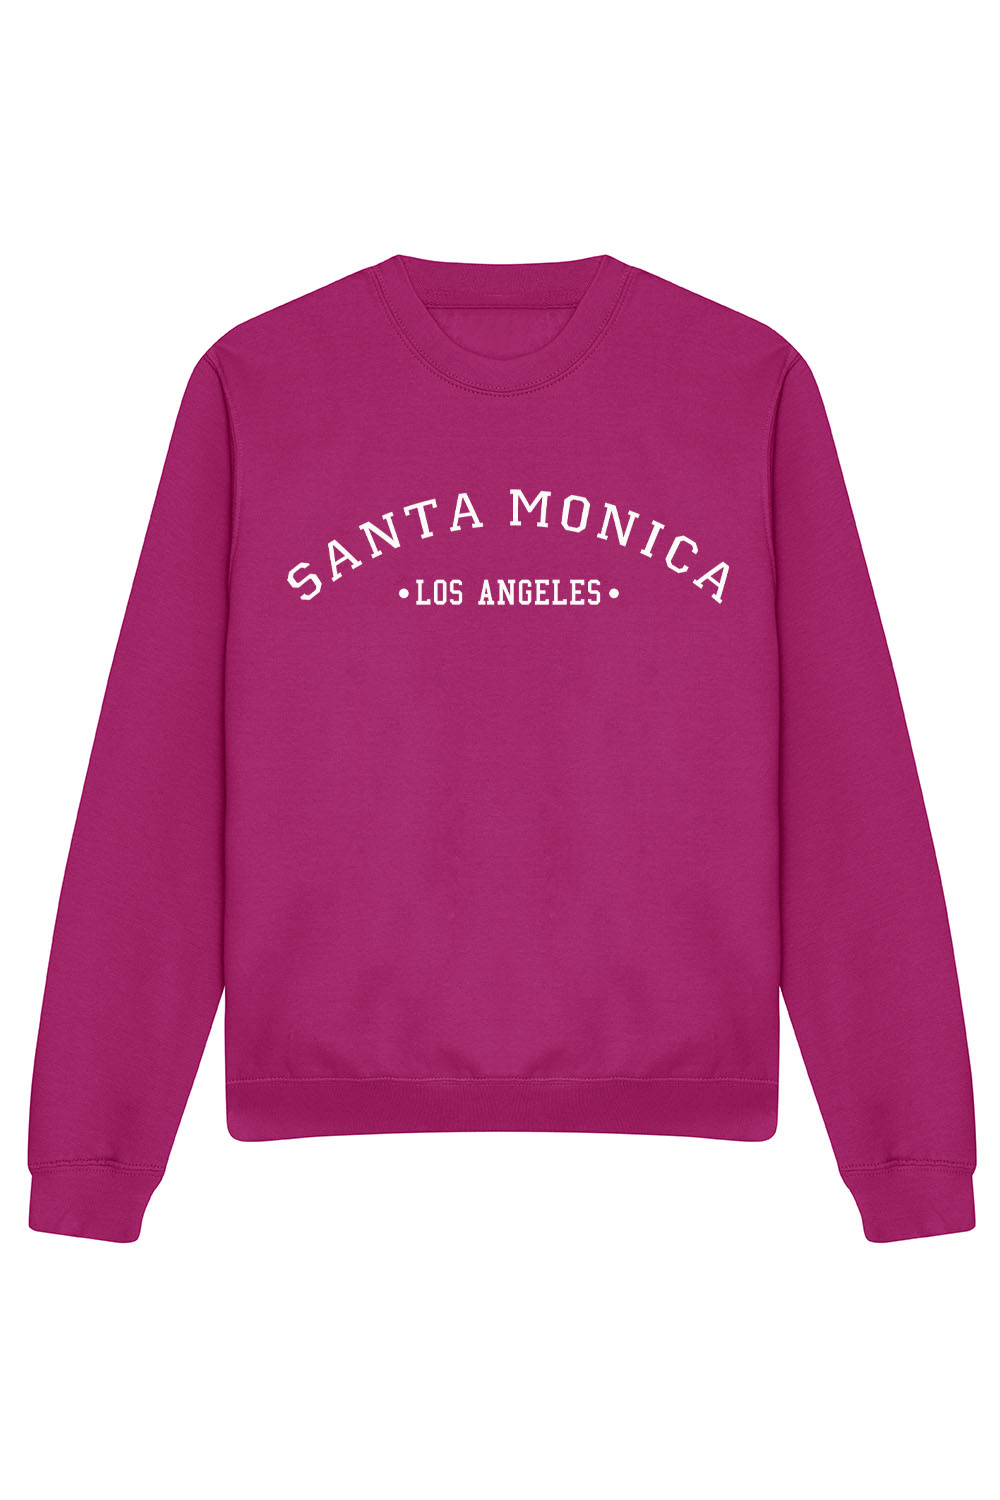 Santa Monica Sweatshirt In Festival Fuchsia (Custom Pack)